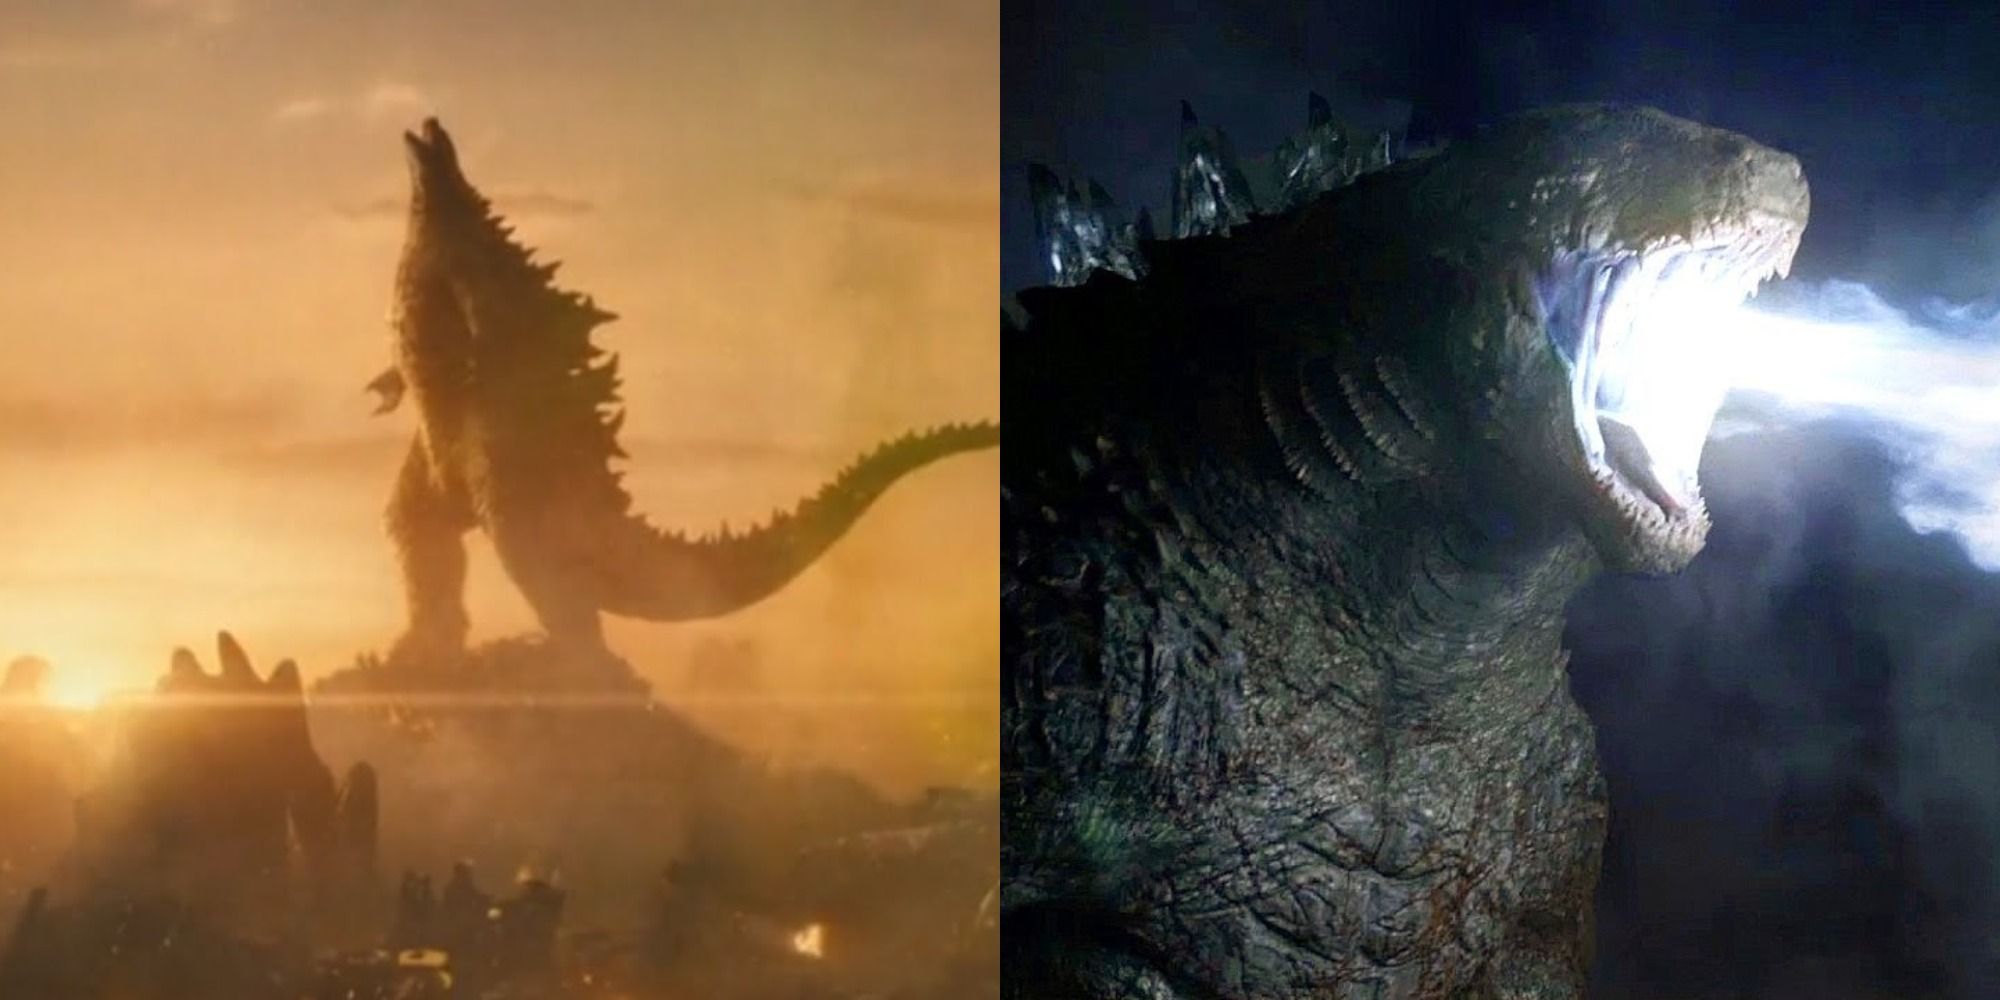 Split image showing Godzilla roaring and firing his atomic breath